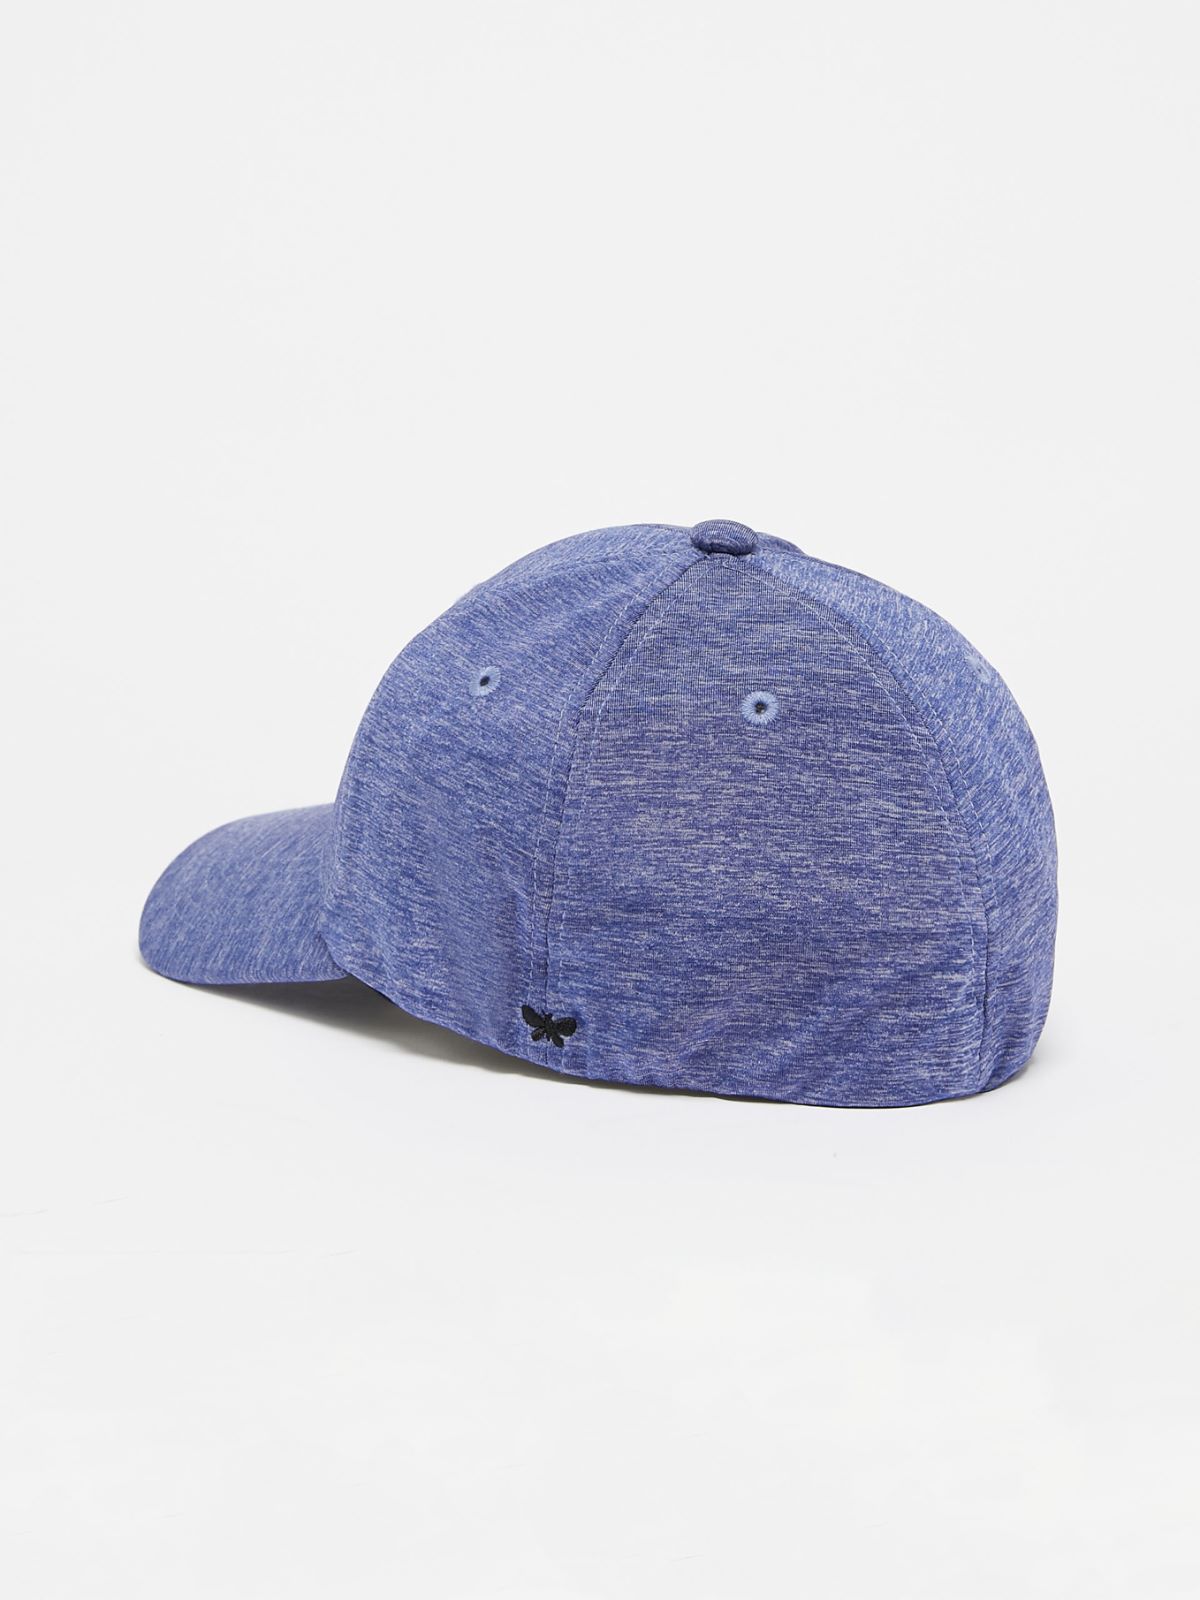 Cotton hat - LIGHT BLUE - Weekend Max Mara - 3